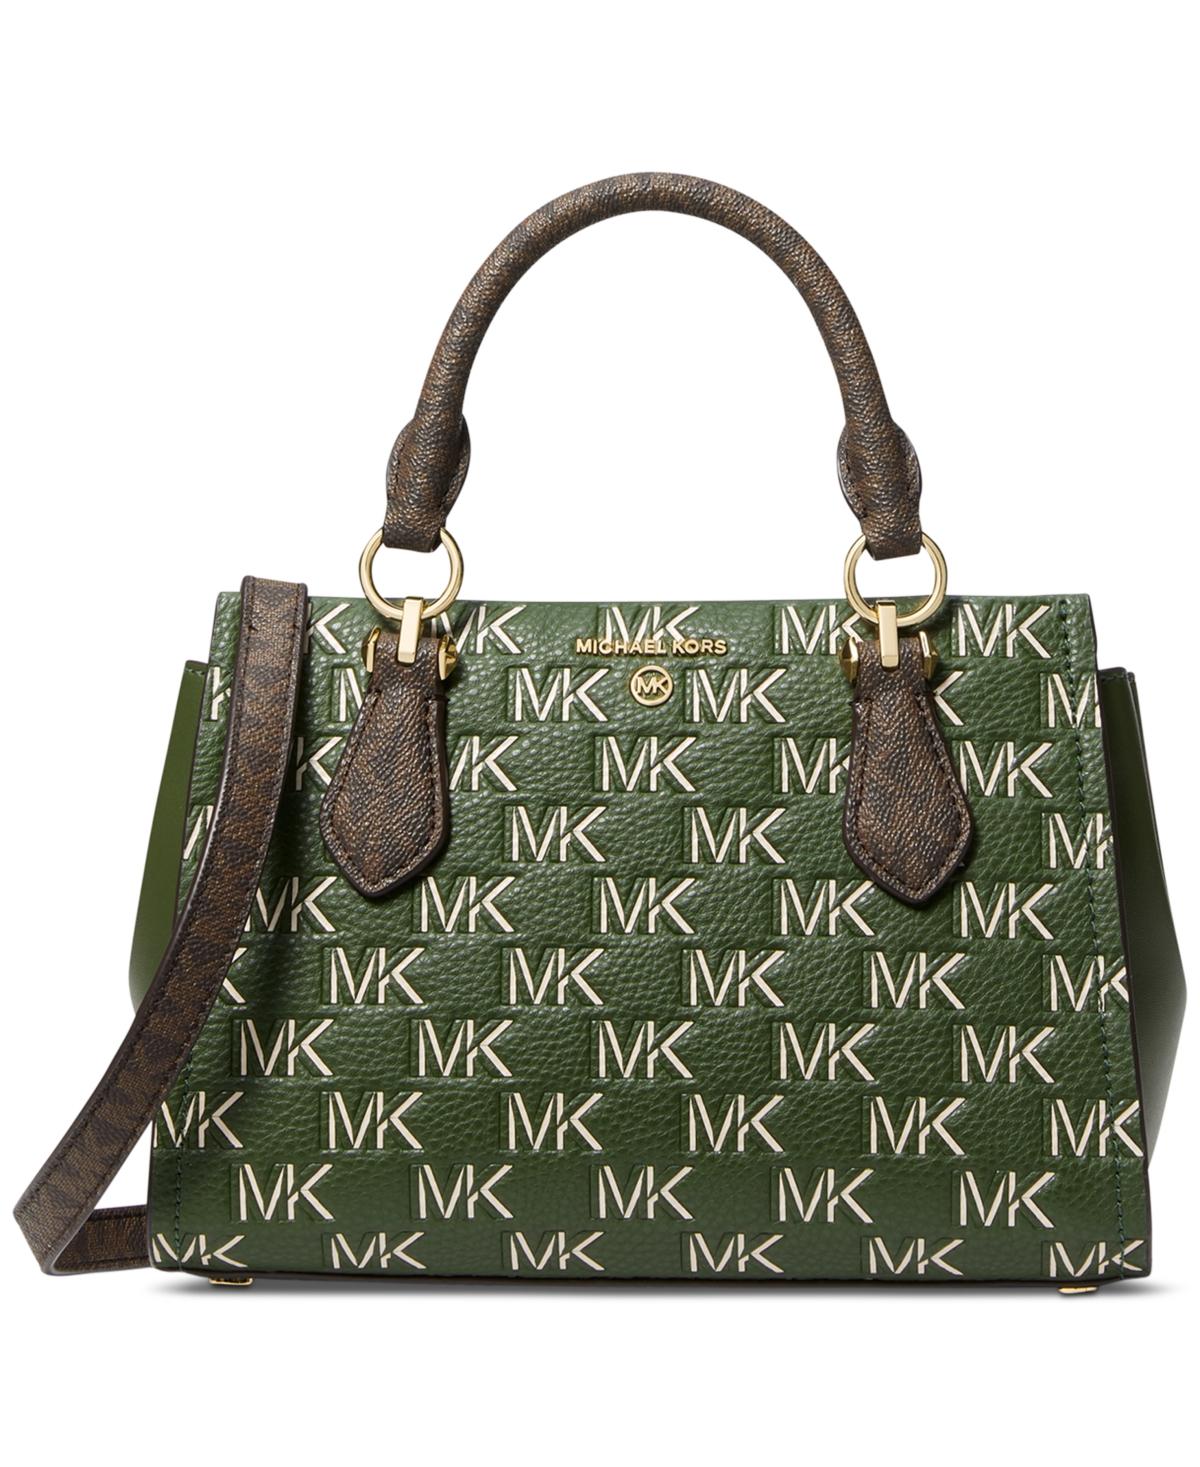 MK purse from Marshall's  Michael kors handbags sale, Purses